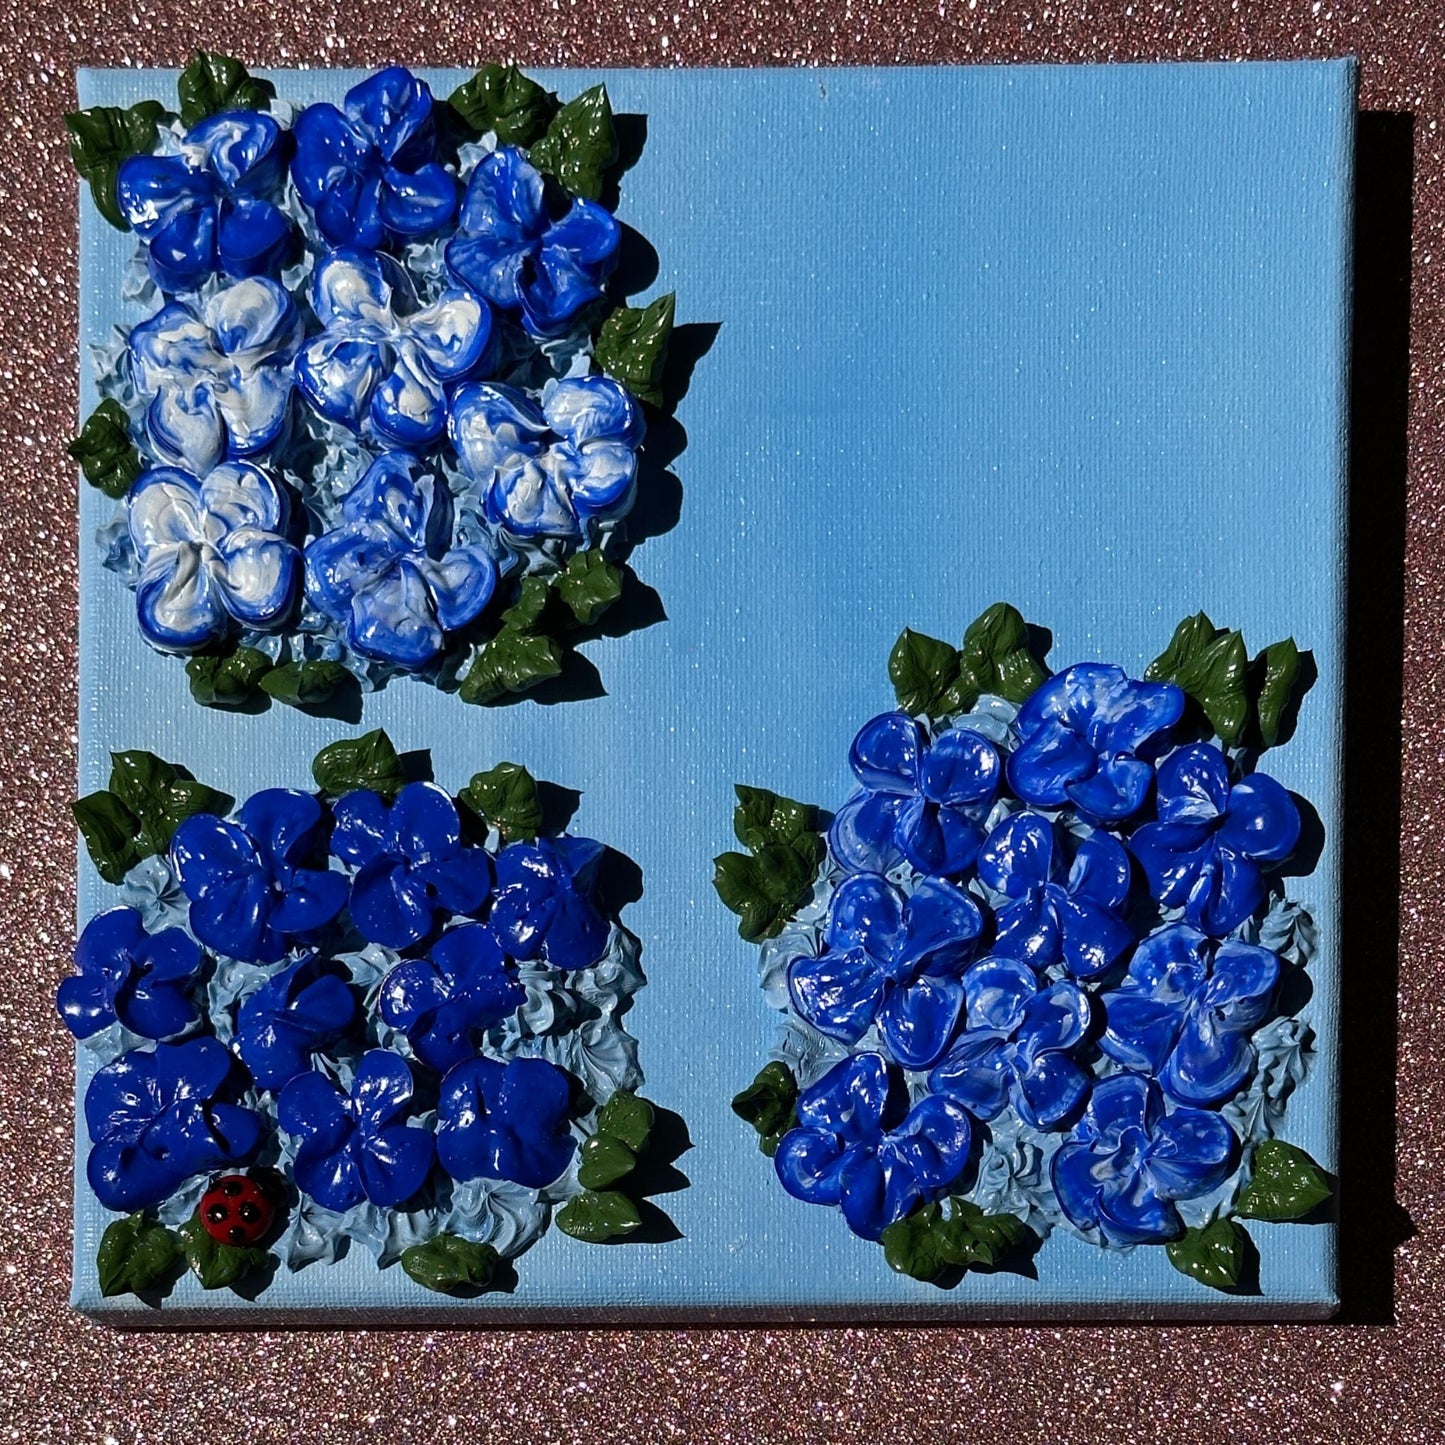 3D Blue Hydrangeas on Blue Canvas 8"x8"